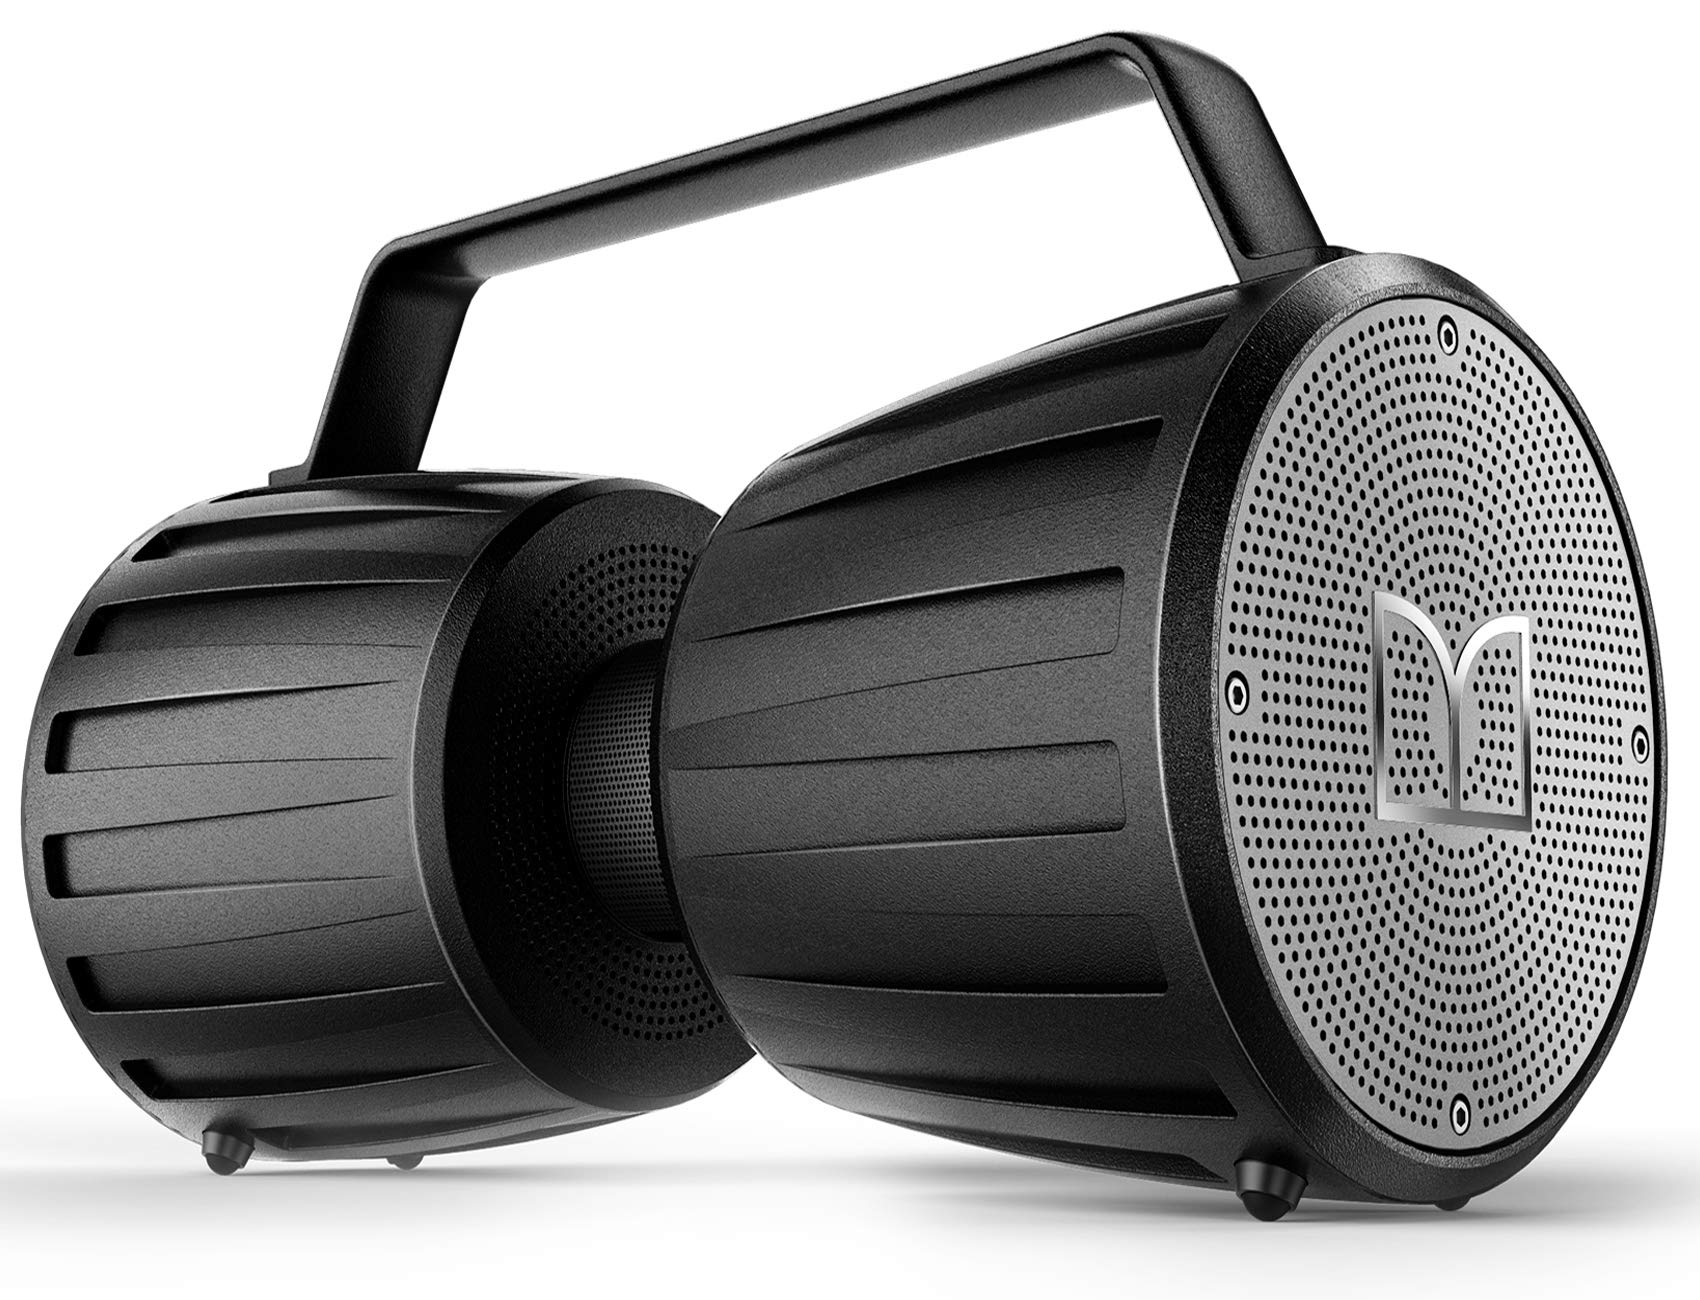 Monster Adventurer Force Bluetooth Speaker IPX7 Waterproof Speaker 5.0, Black (7753016672494)